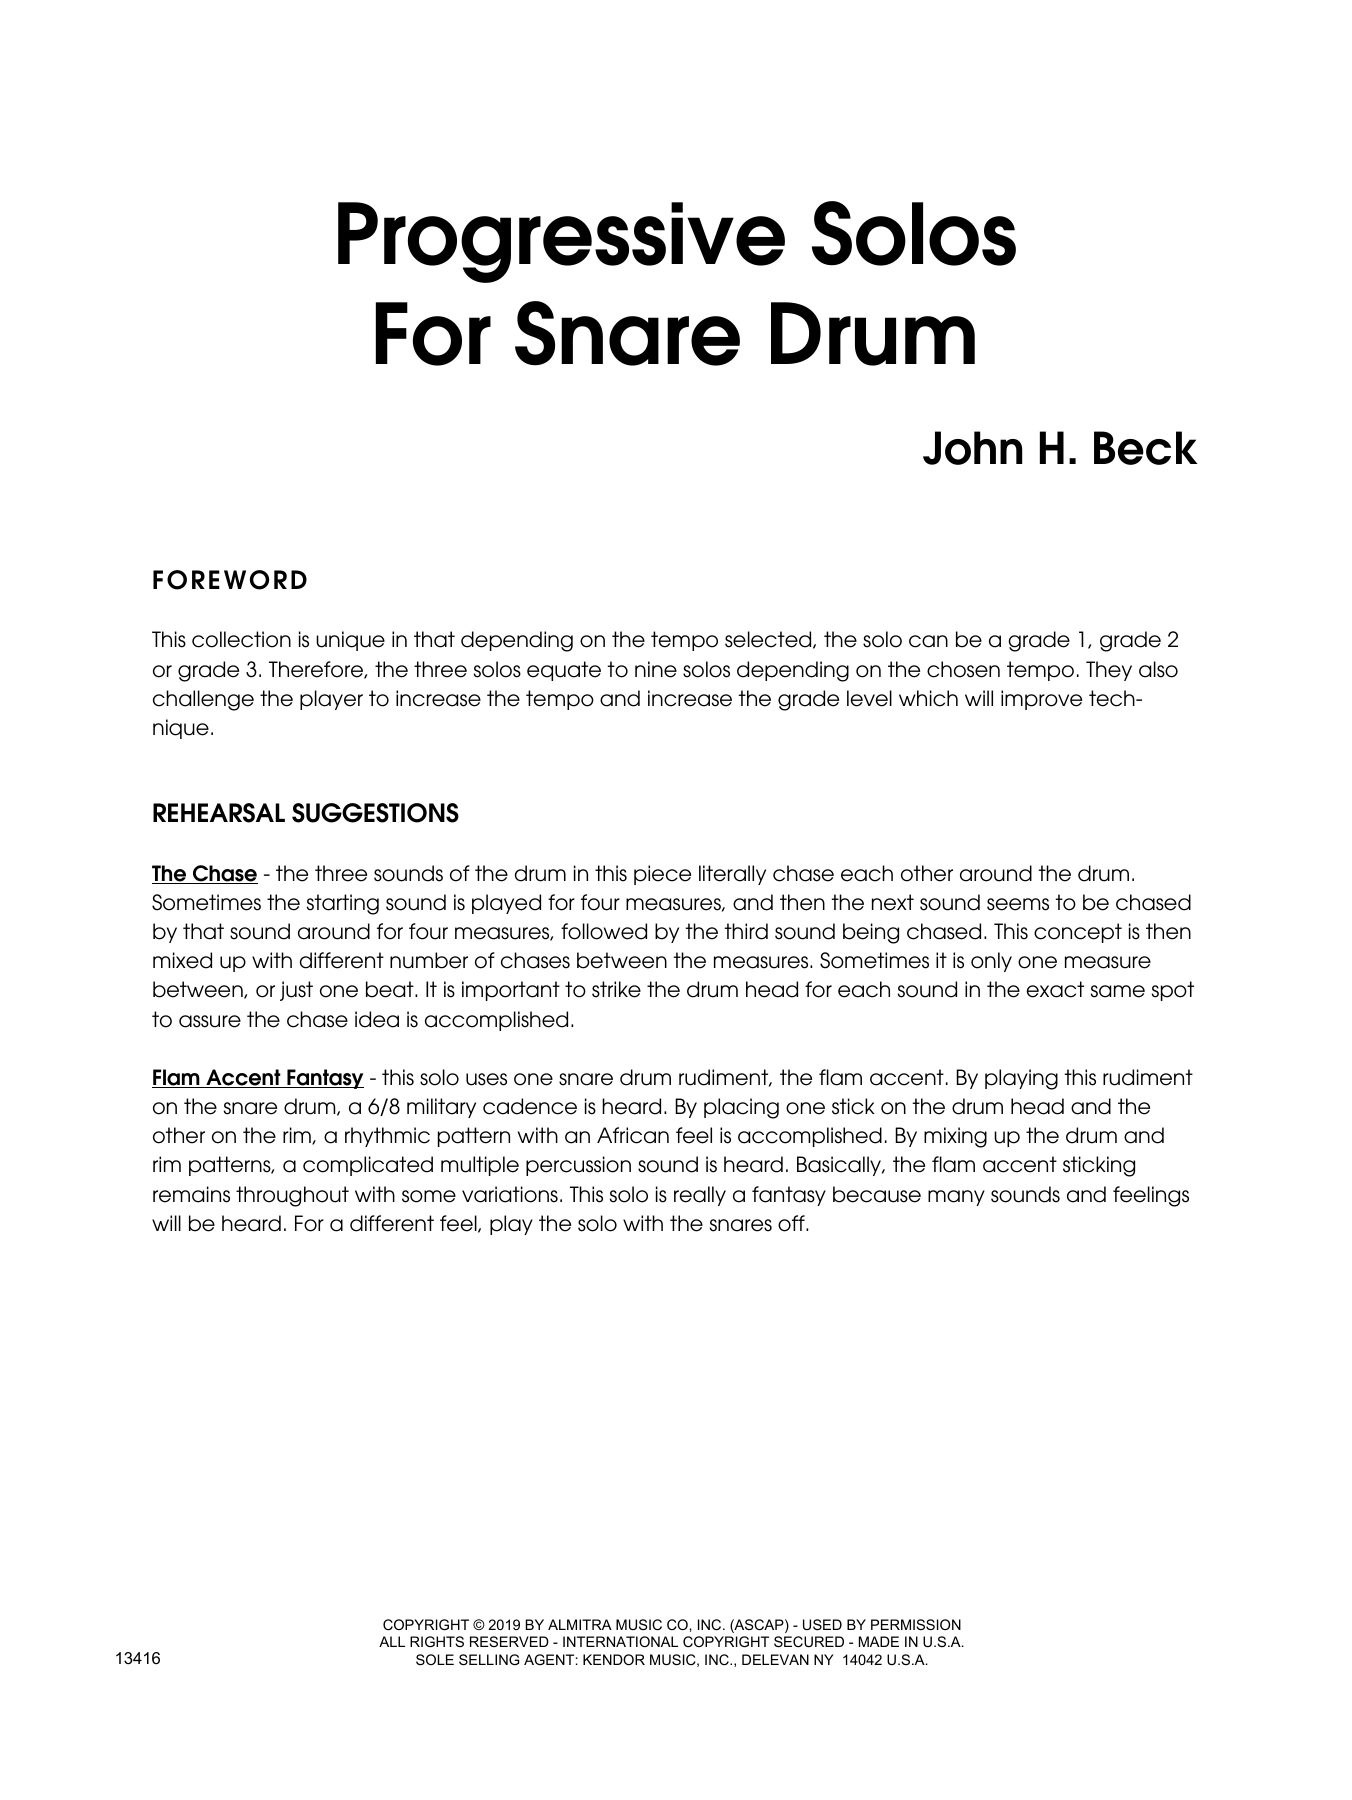 Download John H. Beck Progressive Solos For Snare Drum Sheet Music